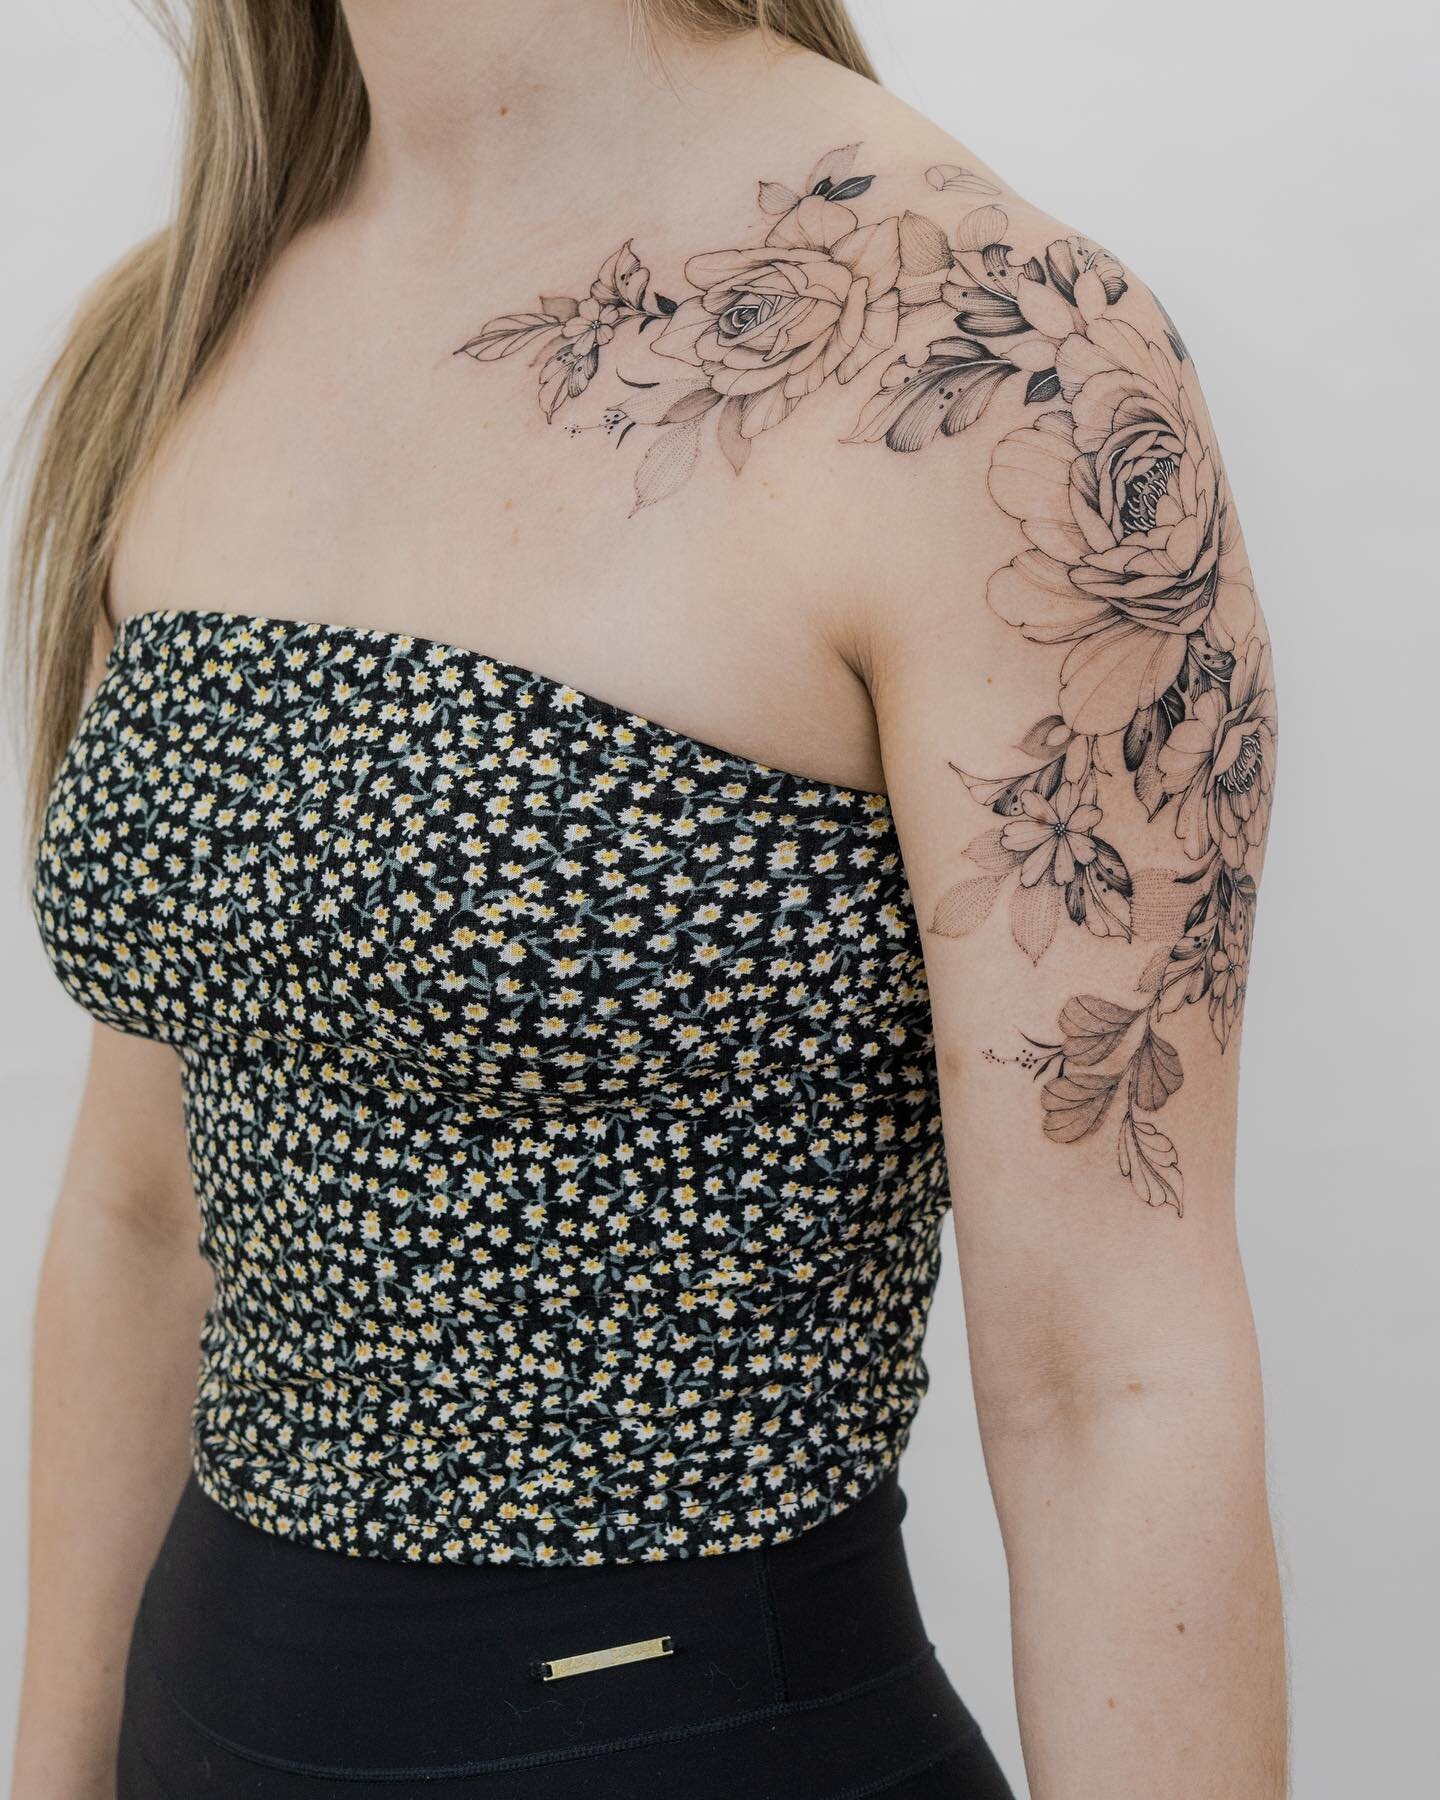 Bethany&rsquo;s first tattoo 🌹 
.
.
.
.

 #tattoo #tattoos #finelinetattoos #frehandtattoo #tattoartist #finelinetattoo #fineline #torontotattoo #torontotattoos #torontotattooartist #floral #floraltattoos #flowertattoo #montrealtattoo #peony #peonyt